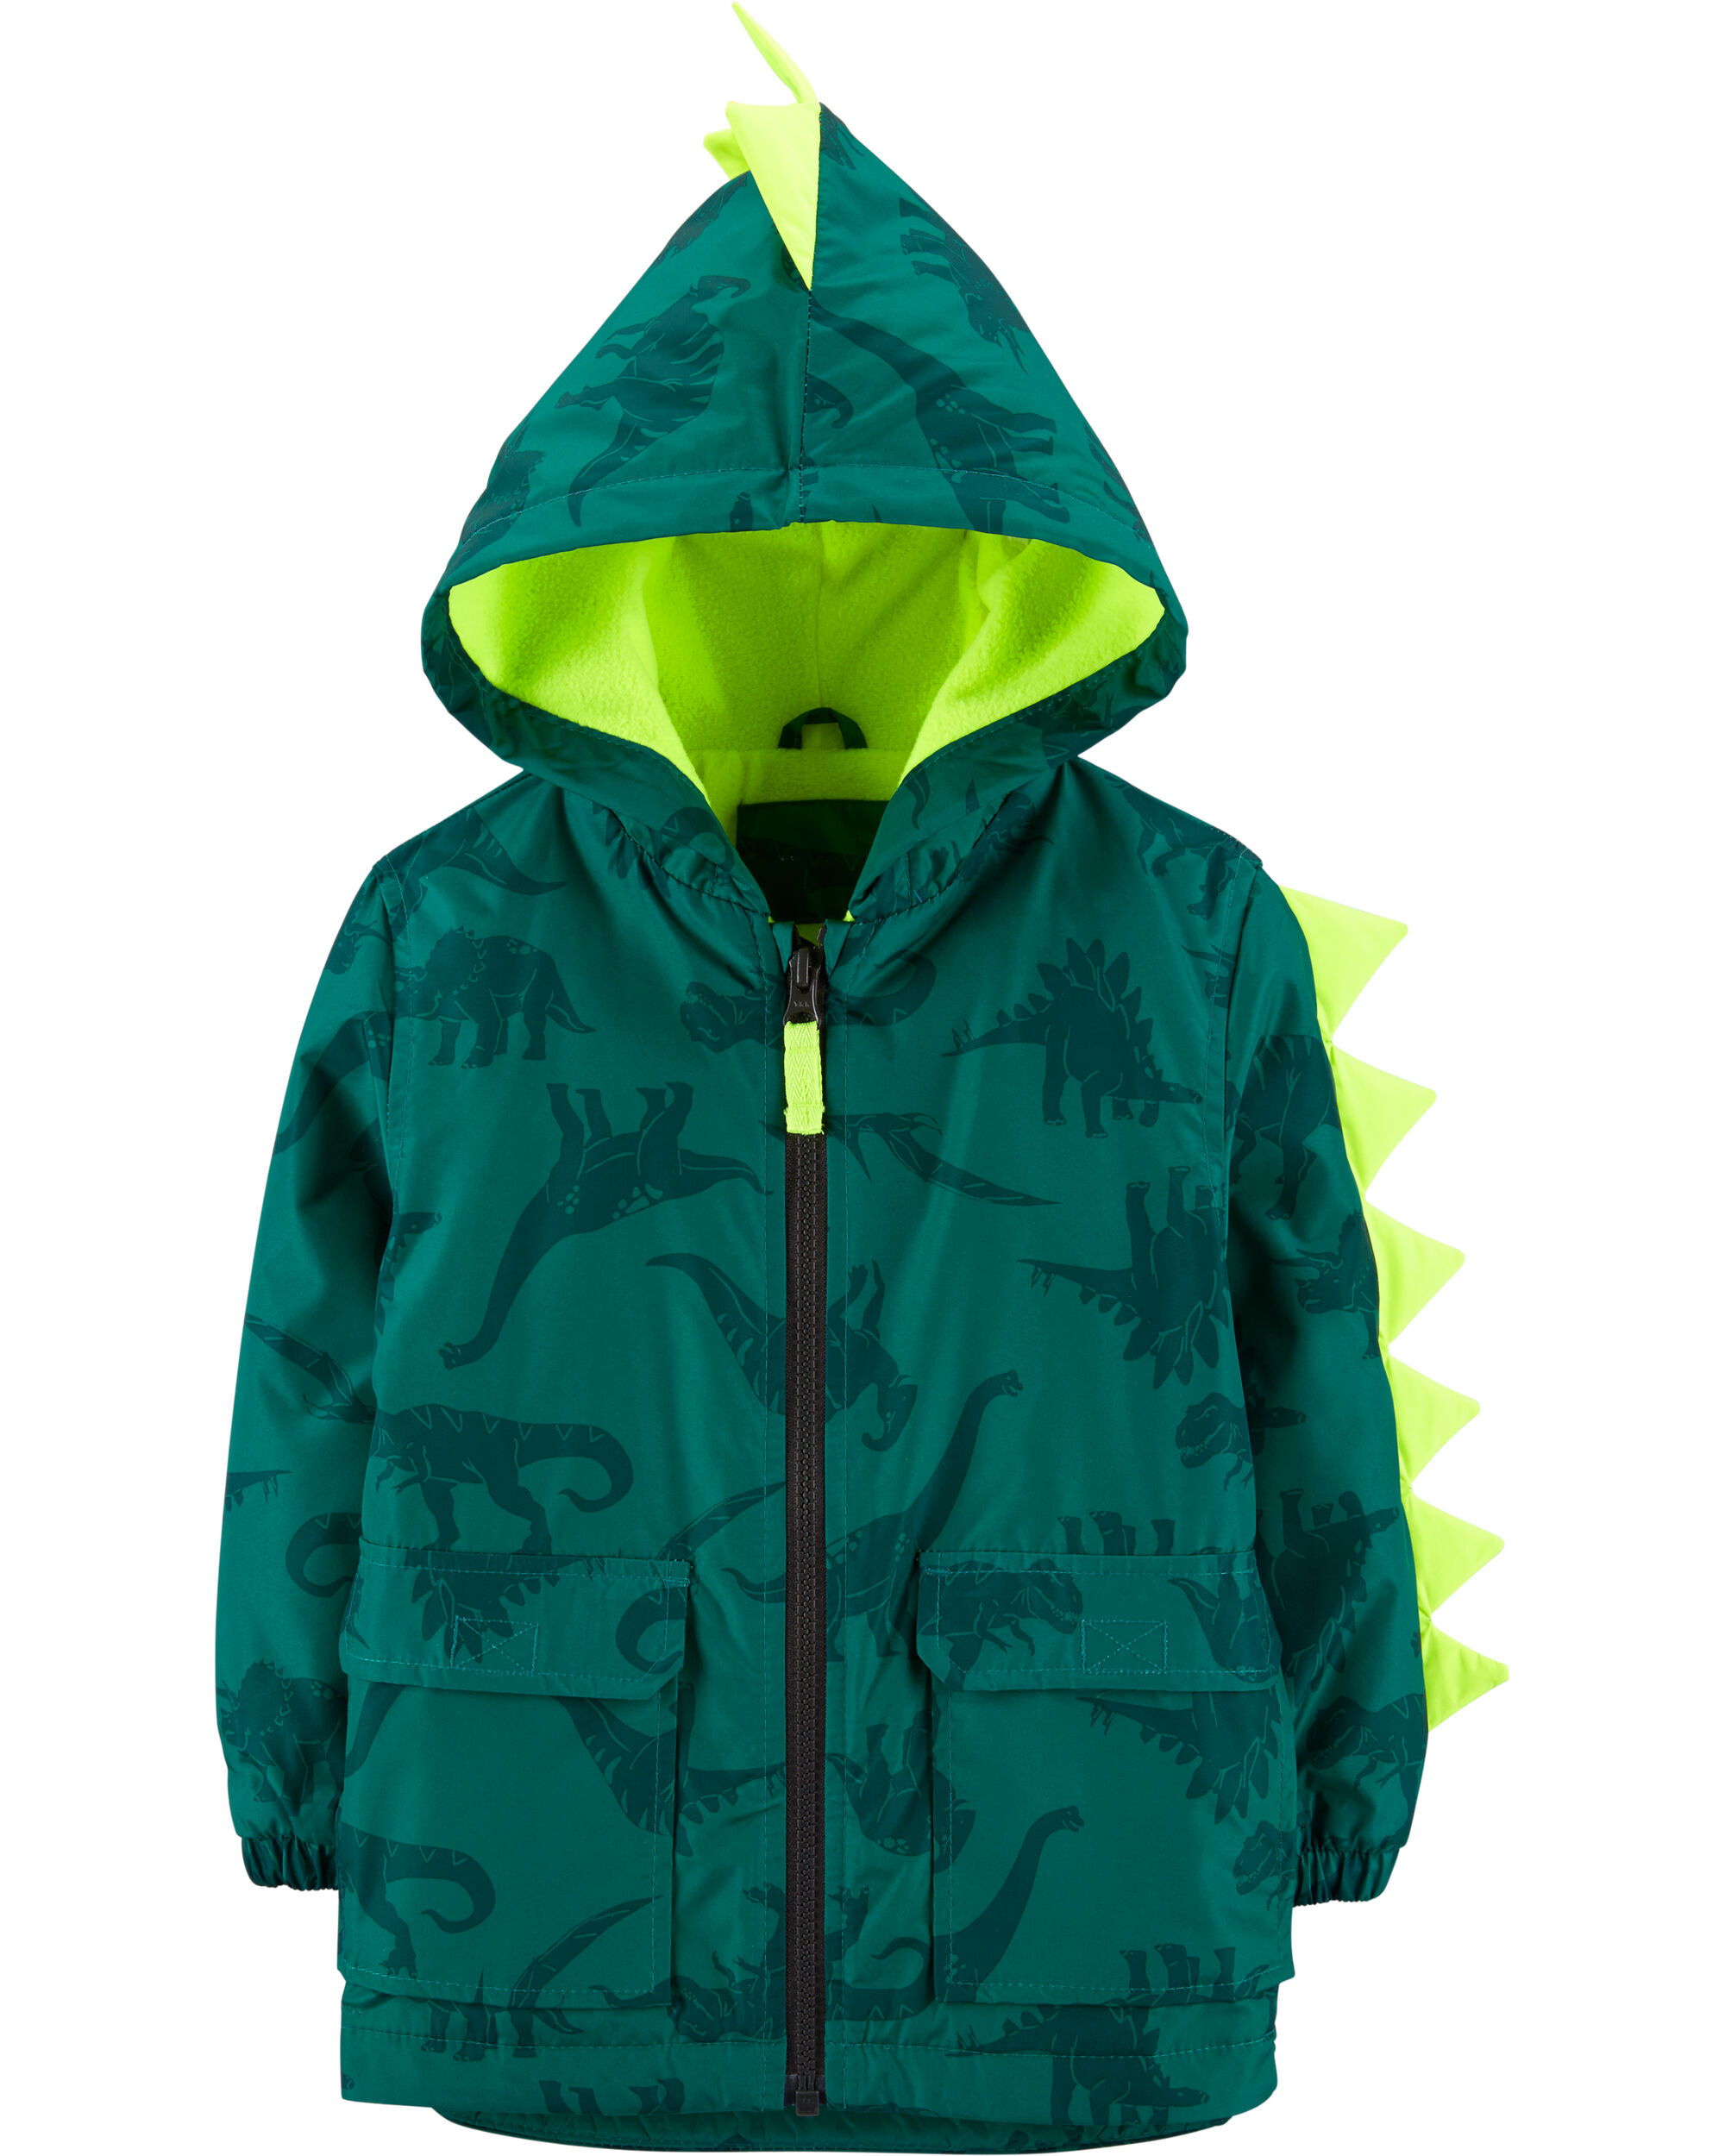 Fleece-Lined Dinosaur Rain Jacket 